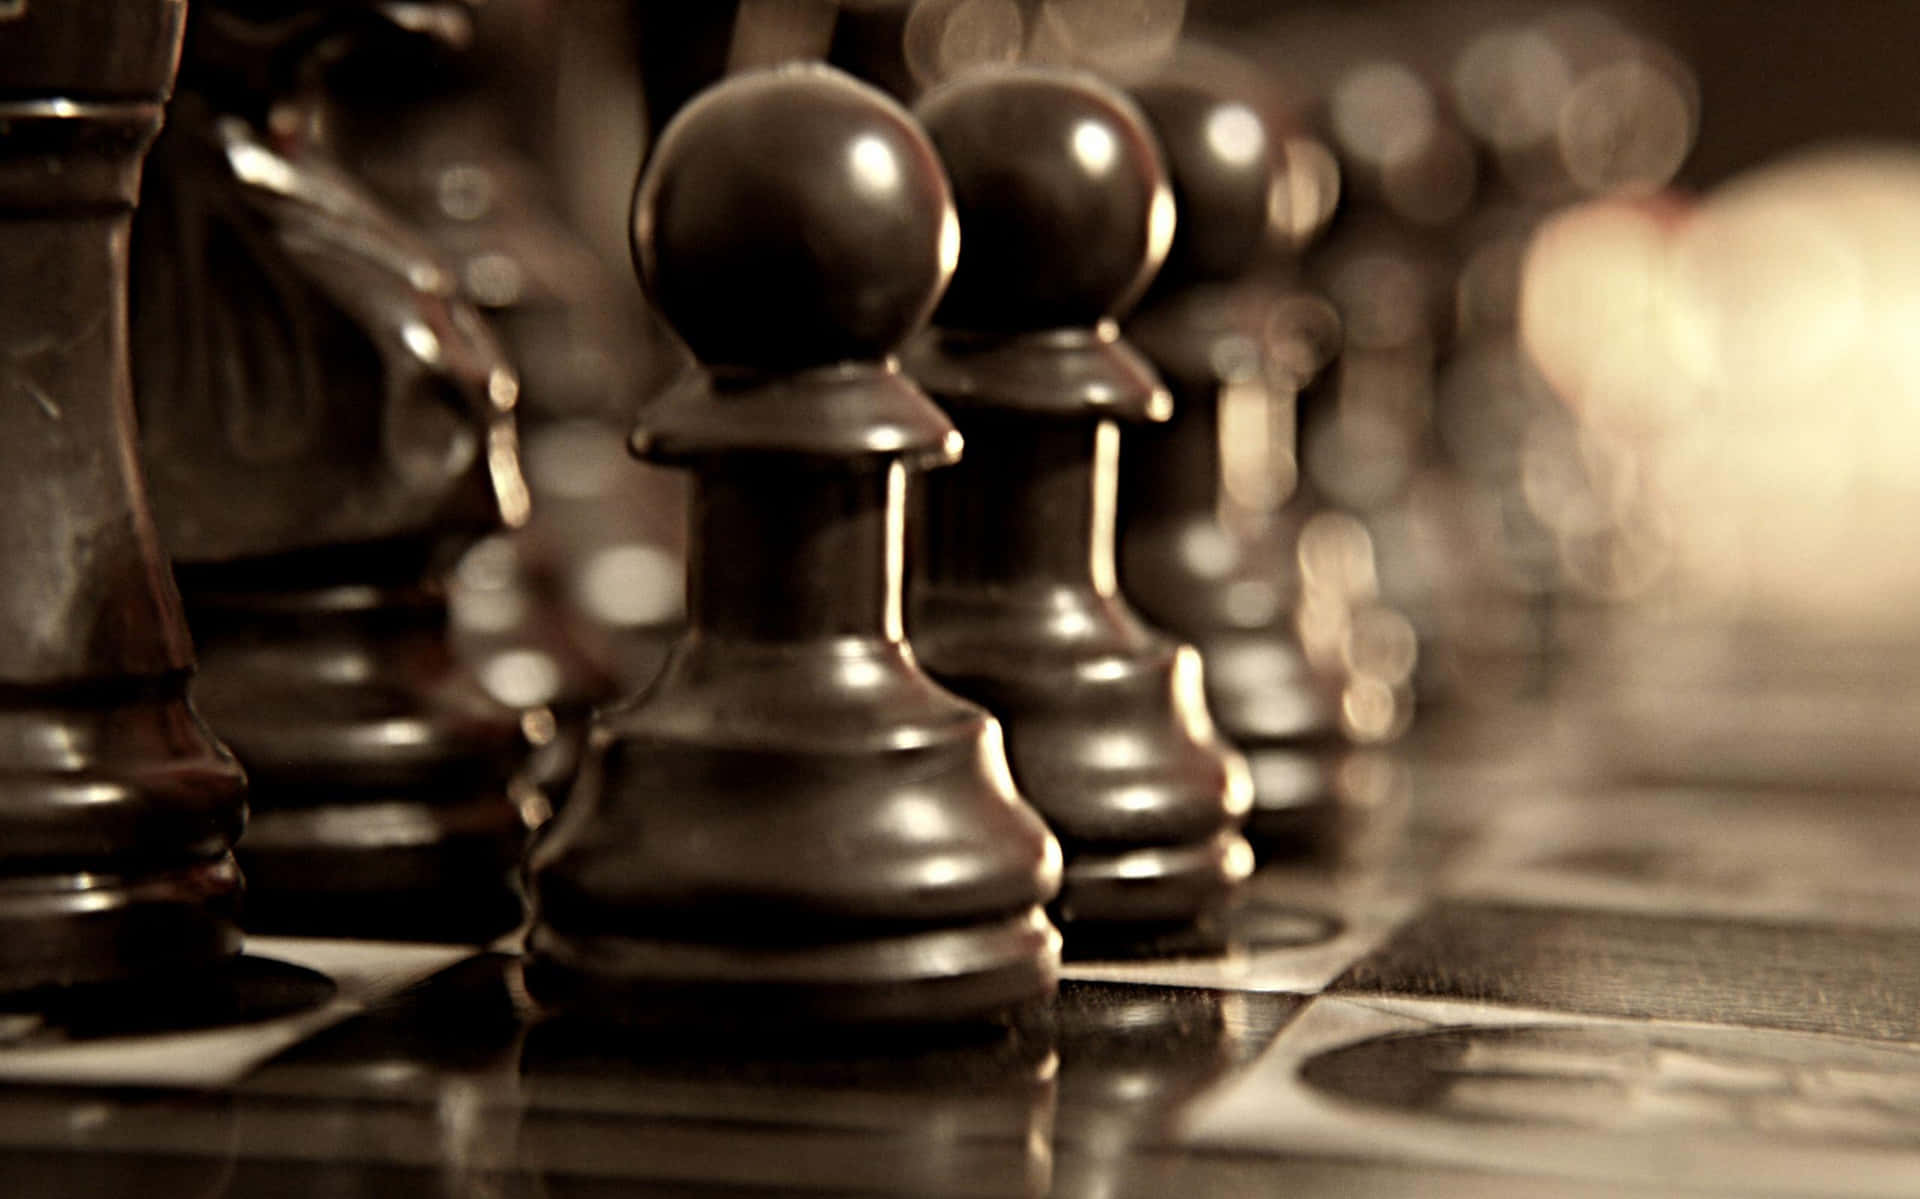 'A Chessboard Ready for Battle'